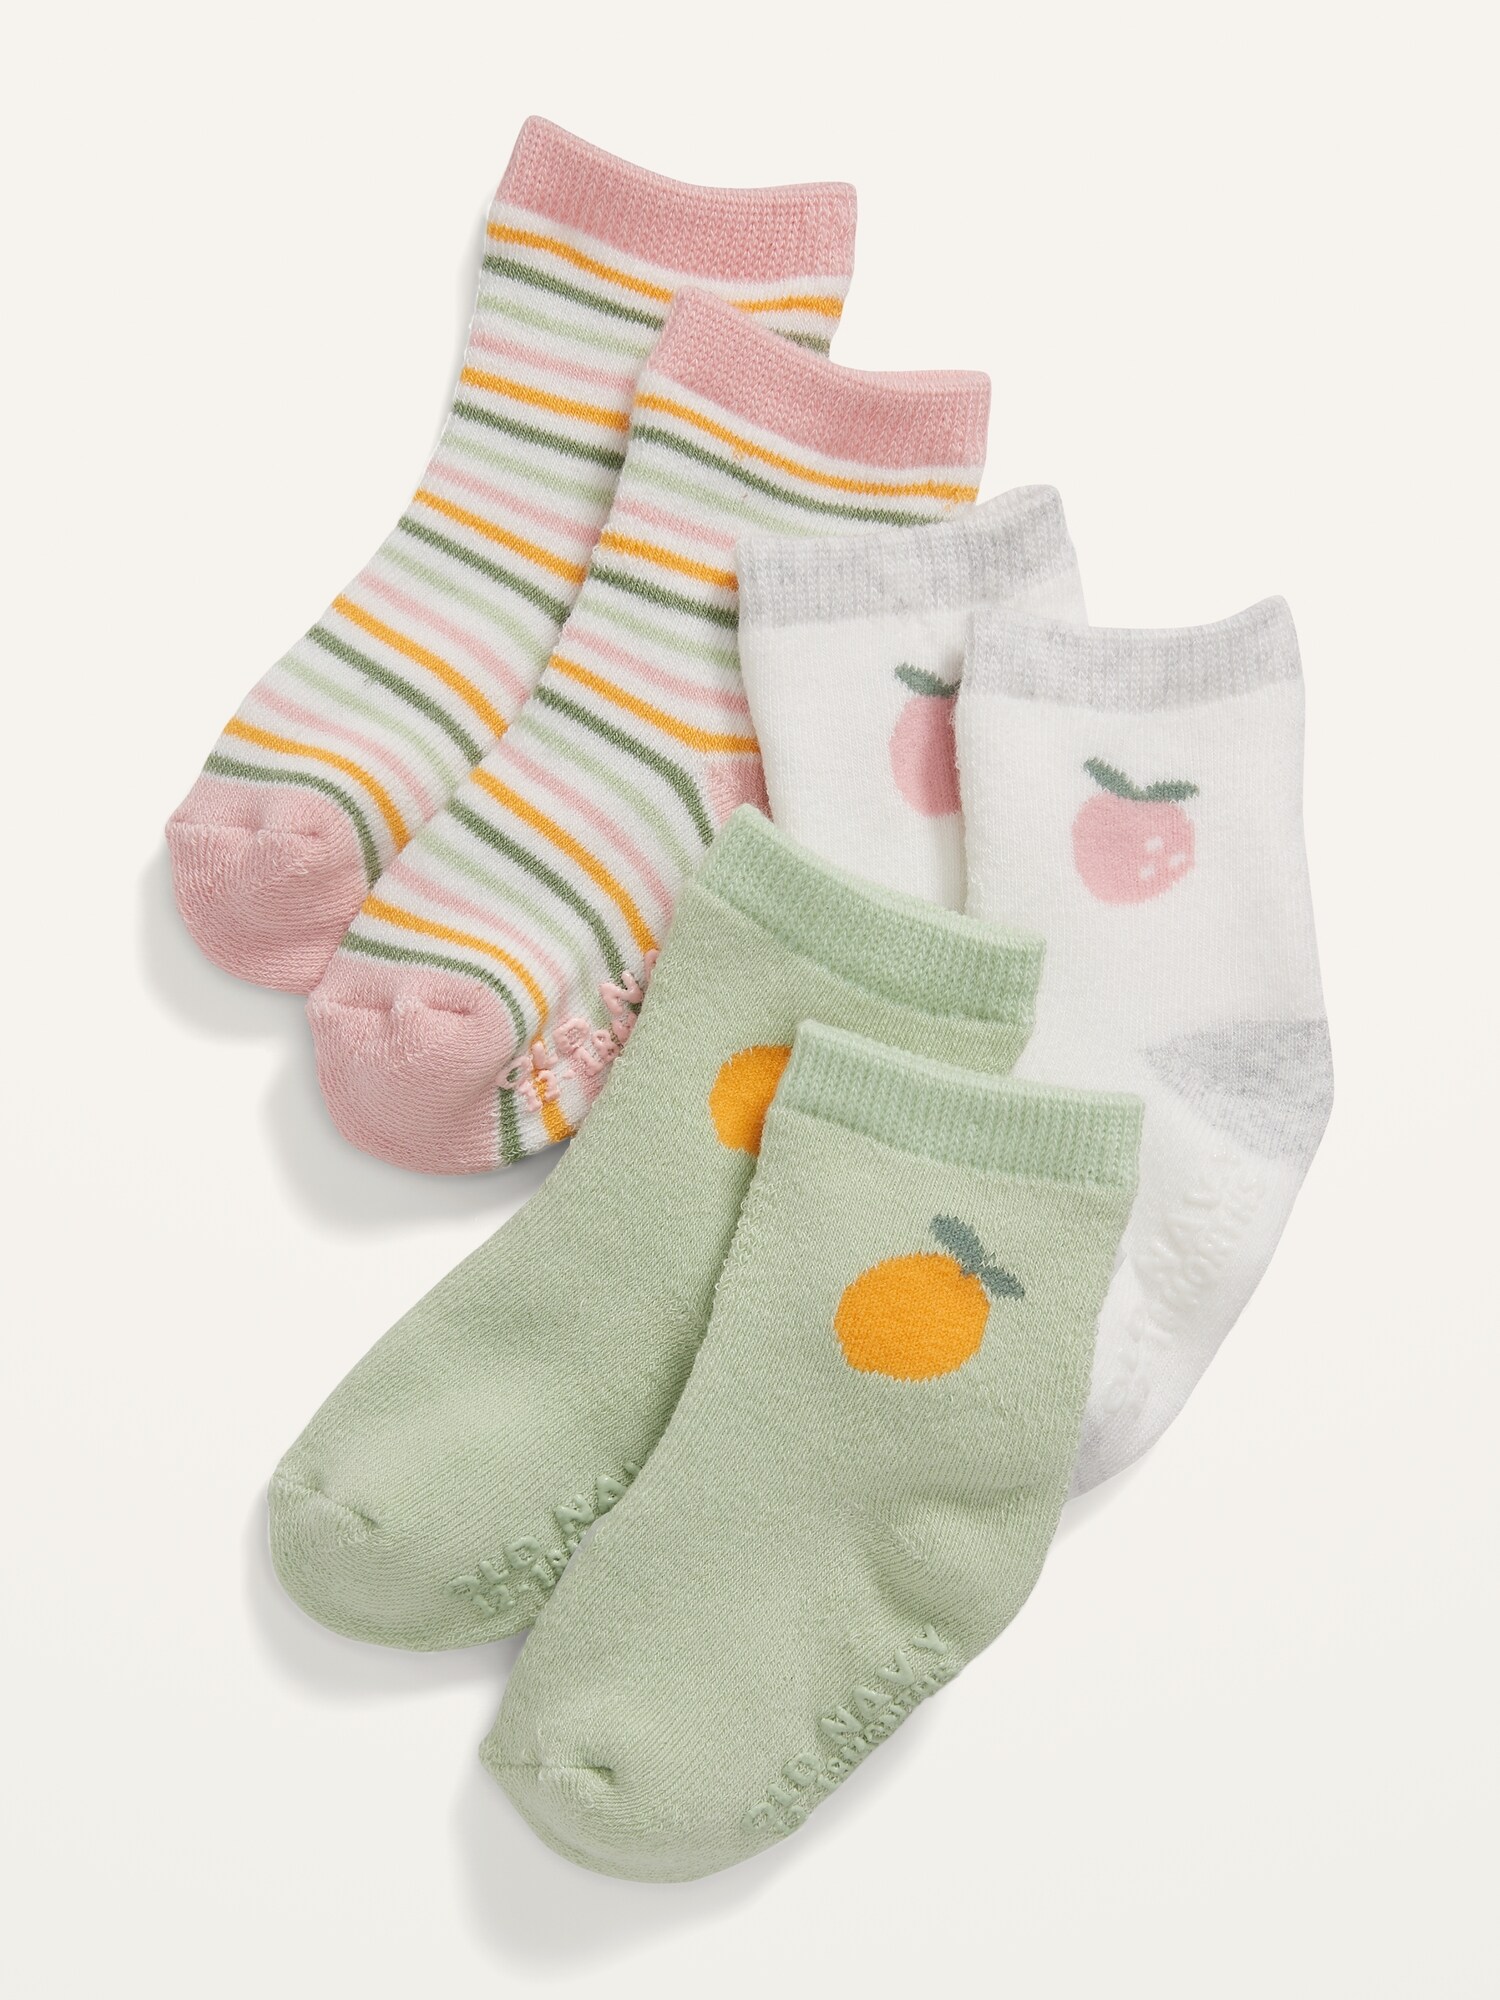 Unisex 3-Pack Printed Crew Socks for Baby